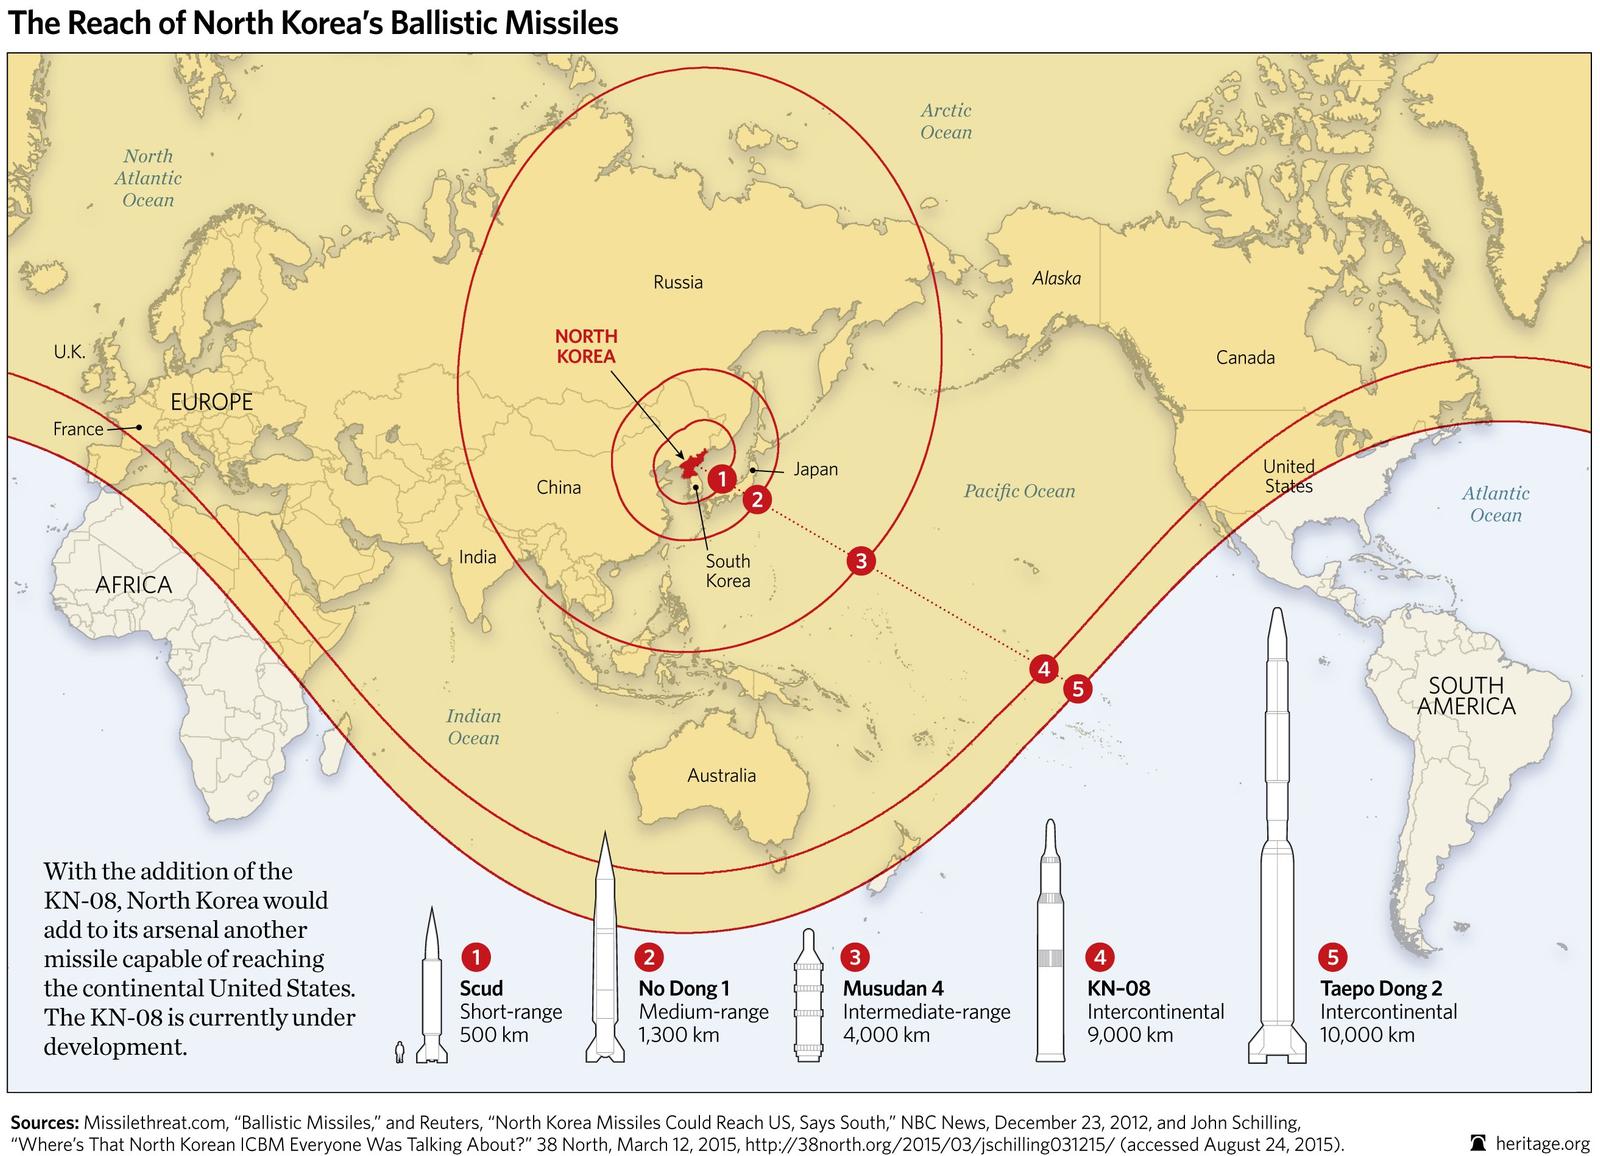 North Korea Missile Map Sources Reuters, NBC and 38North JHU SAIS.jpg